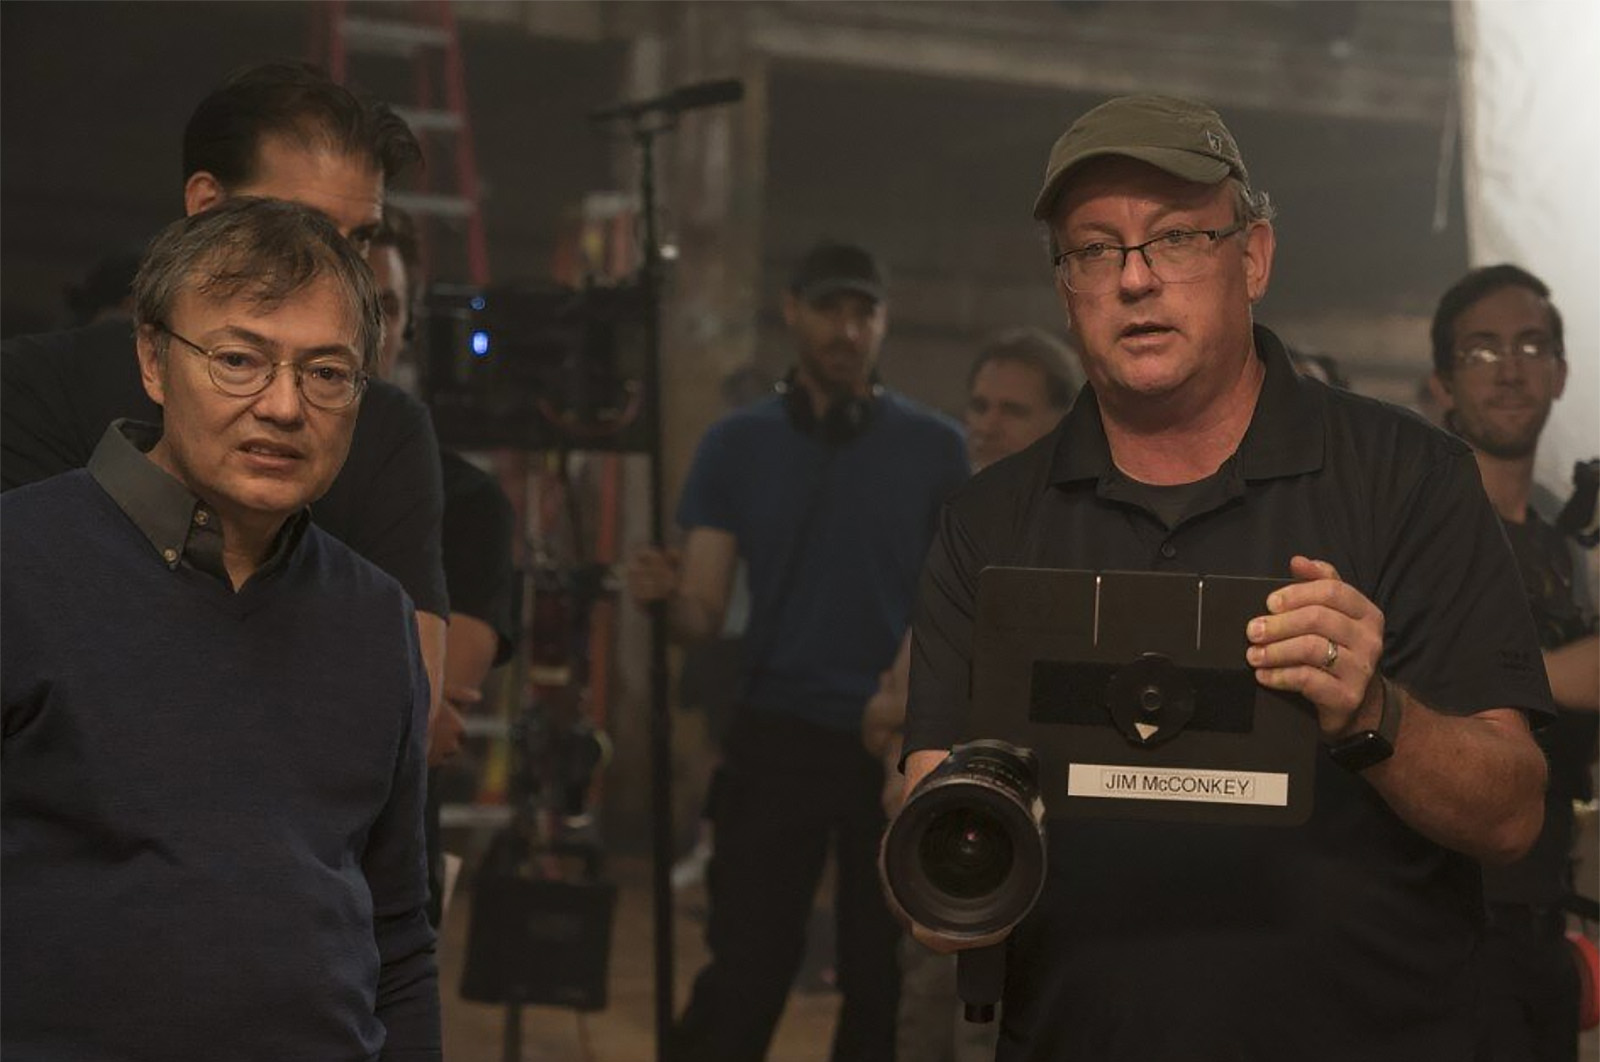 (L-R) Cinematographer David Mullen and cameraman Jim McConkey on the set of The Marvelous Mrs. Maisel. Image © Amazon Studios